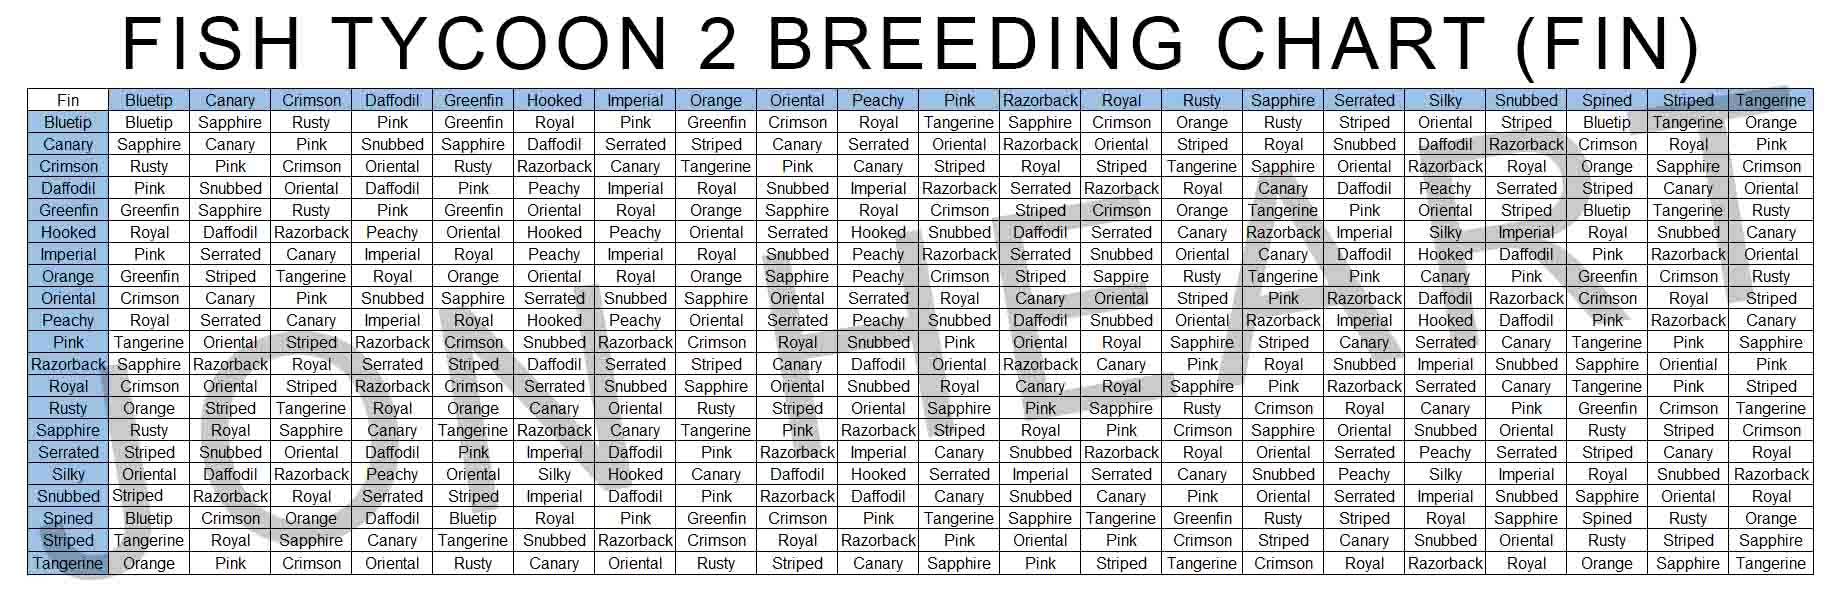 fish tycoon 2 cheats breeding chart